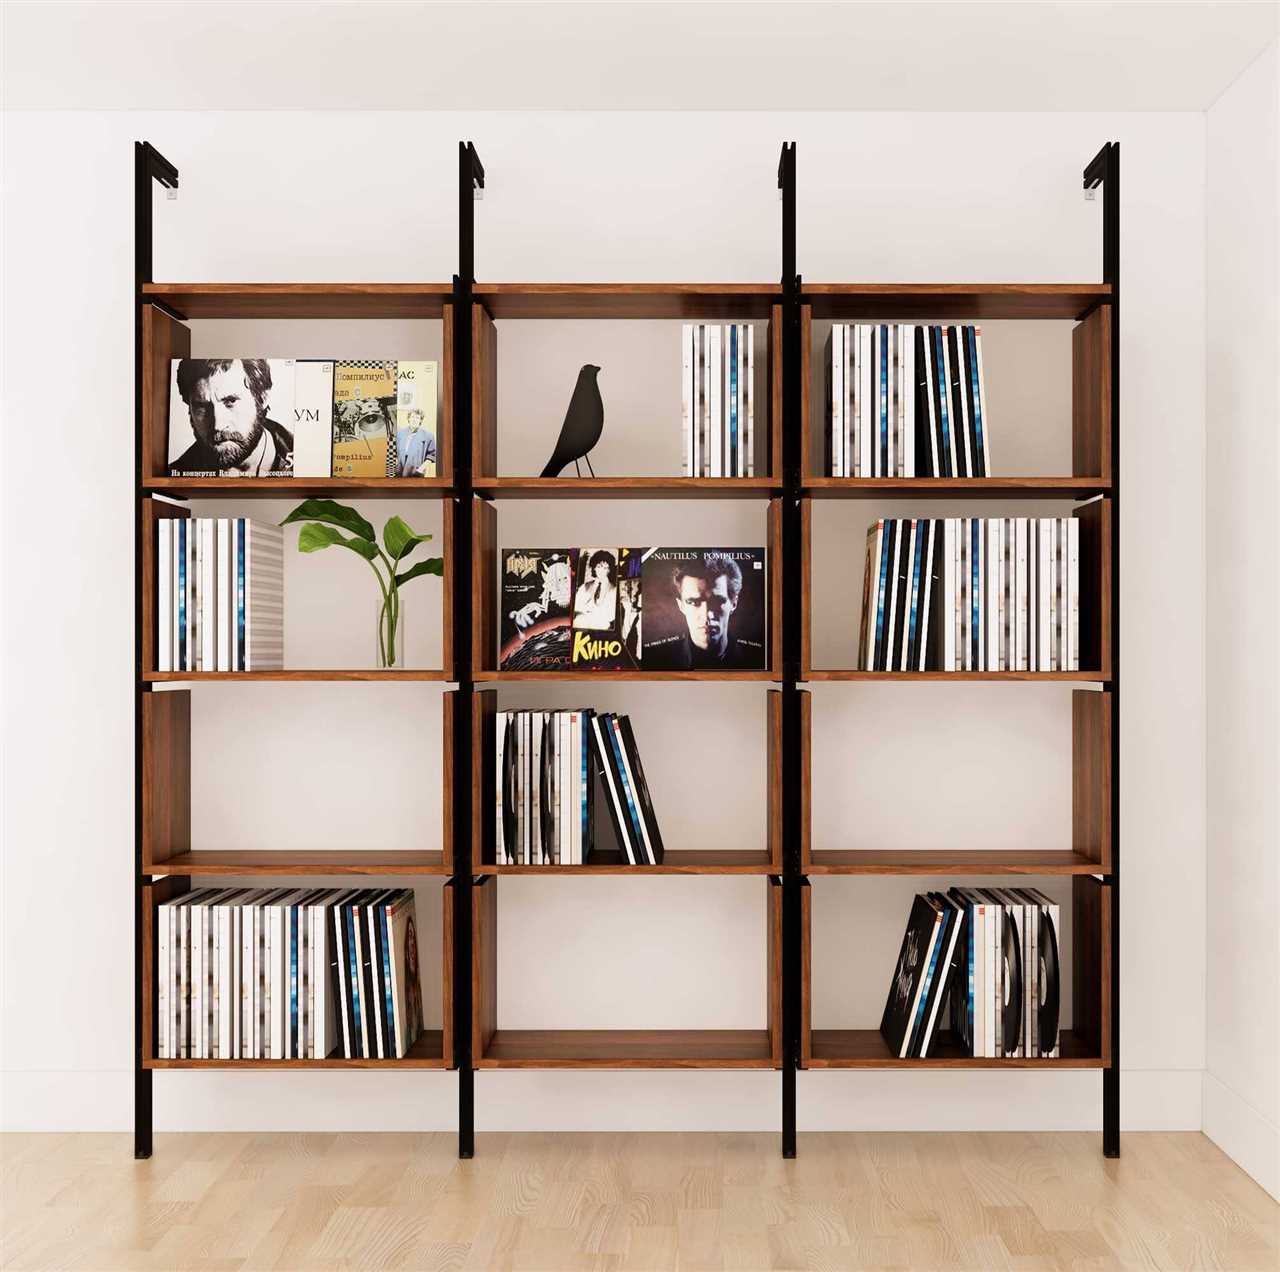 1. Organize Your Vinyl Albums